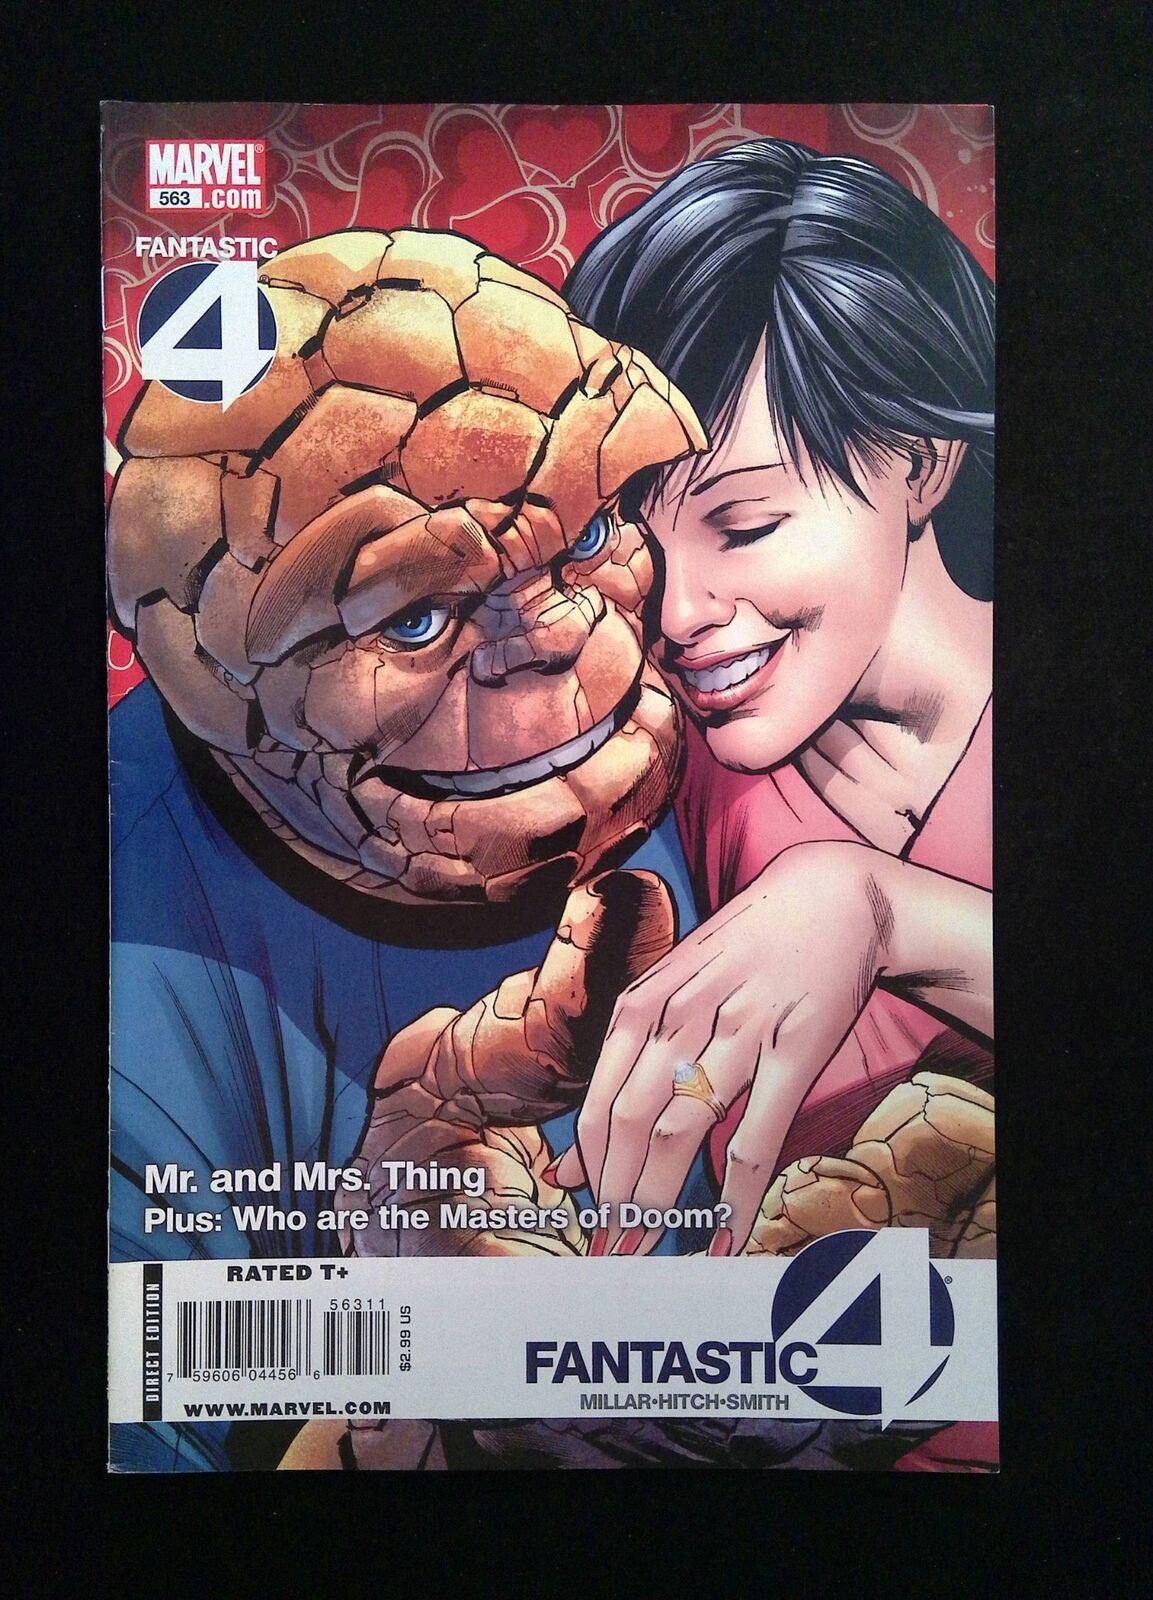 Fantastic Four #563 (3rd Series) Marvel Comics 2009 VF+